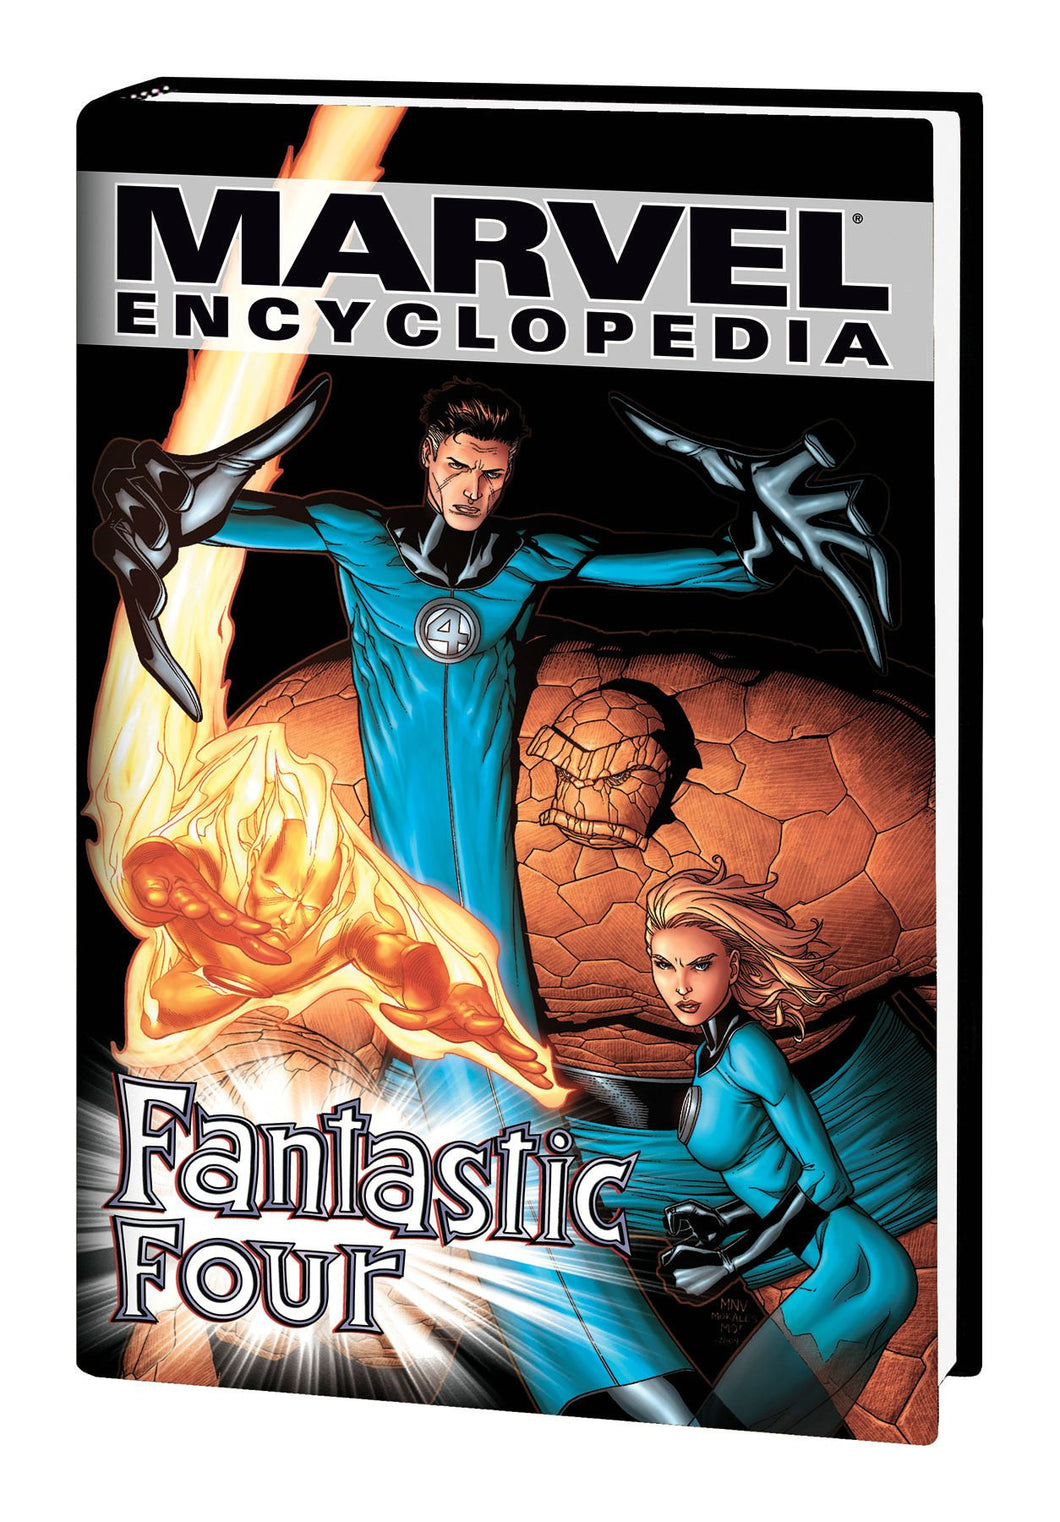 Marvel Encyclopedia Vol. 6 : Fantastic Four